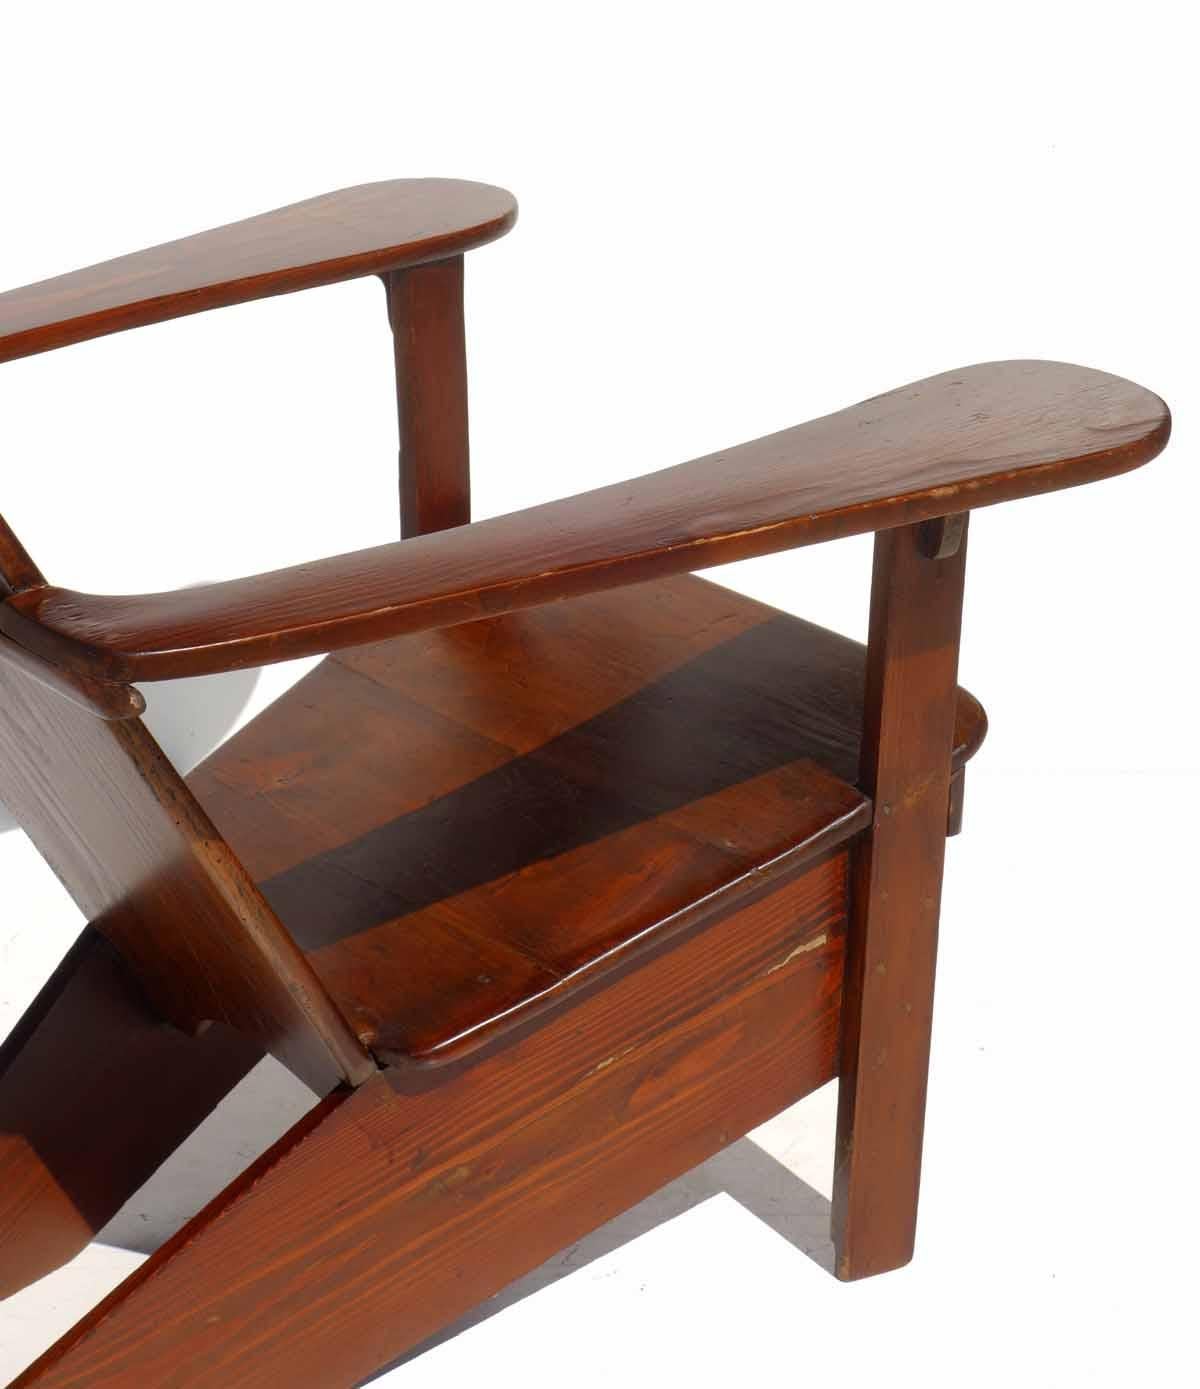 1930s Gino Levi Montalcini Italian Design Rationalist Wood Lounge Chair For Sale 4